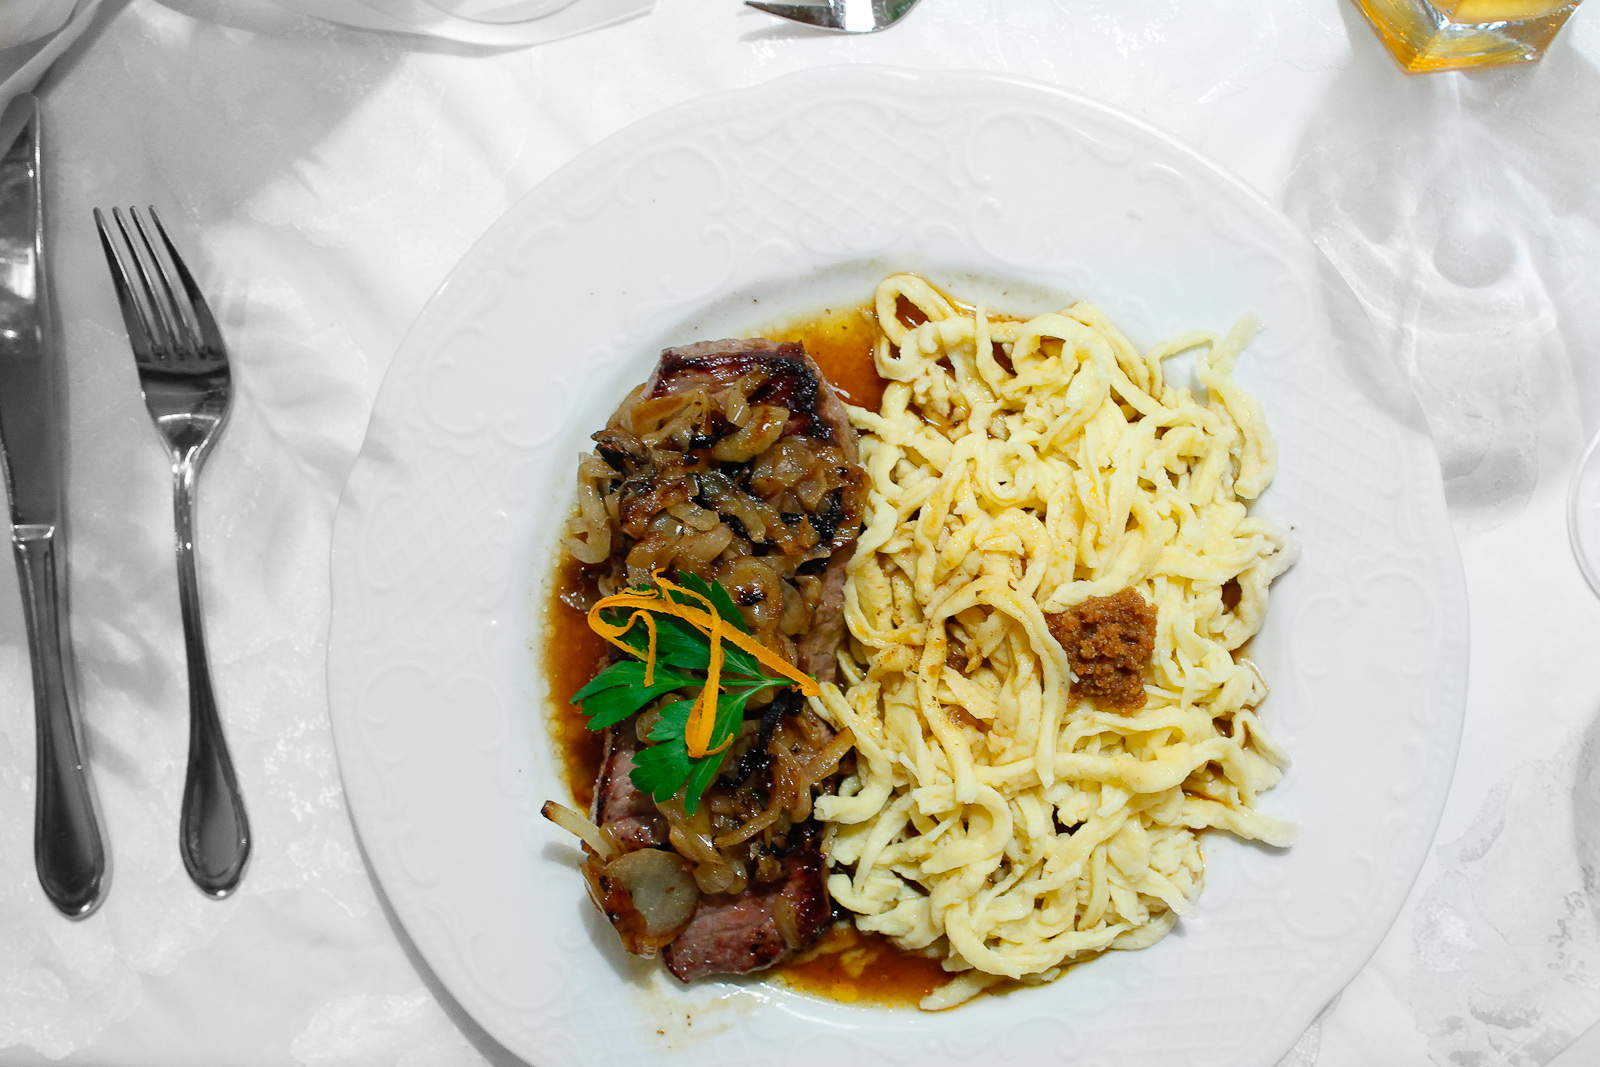 3rd Course: Zwibeltostblaten hit handgeschabten spätzle, lump steak served with fried onions accompanied by handmade spätzle (swabian noodles)